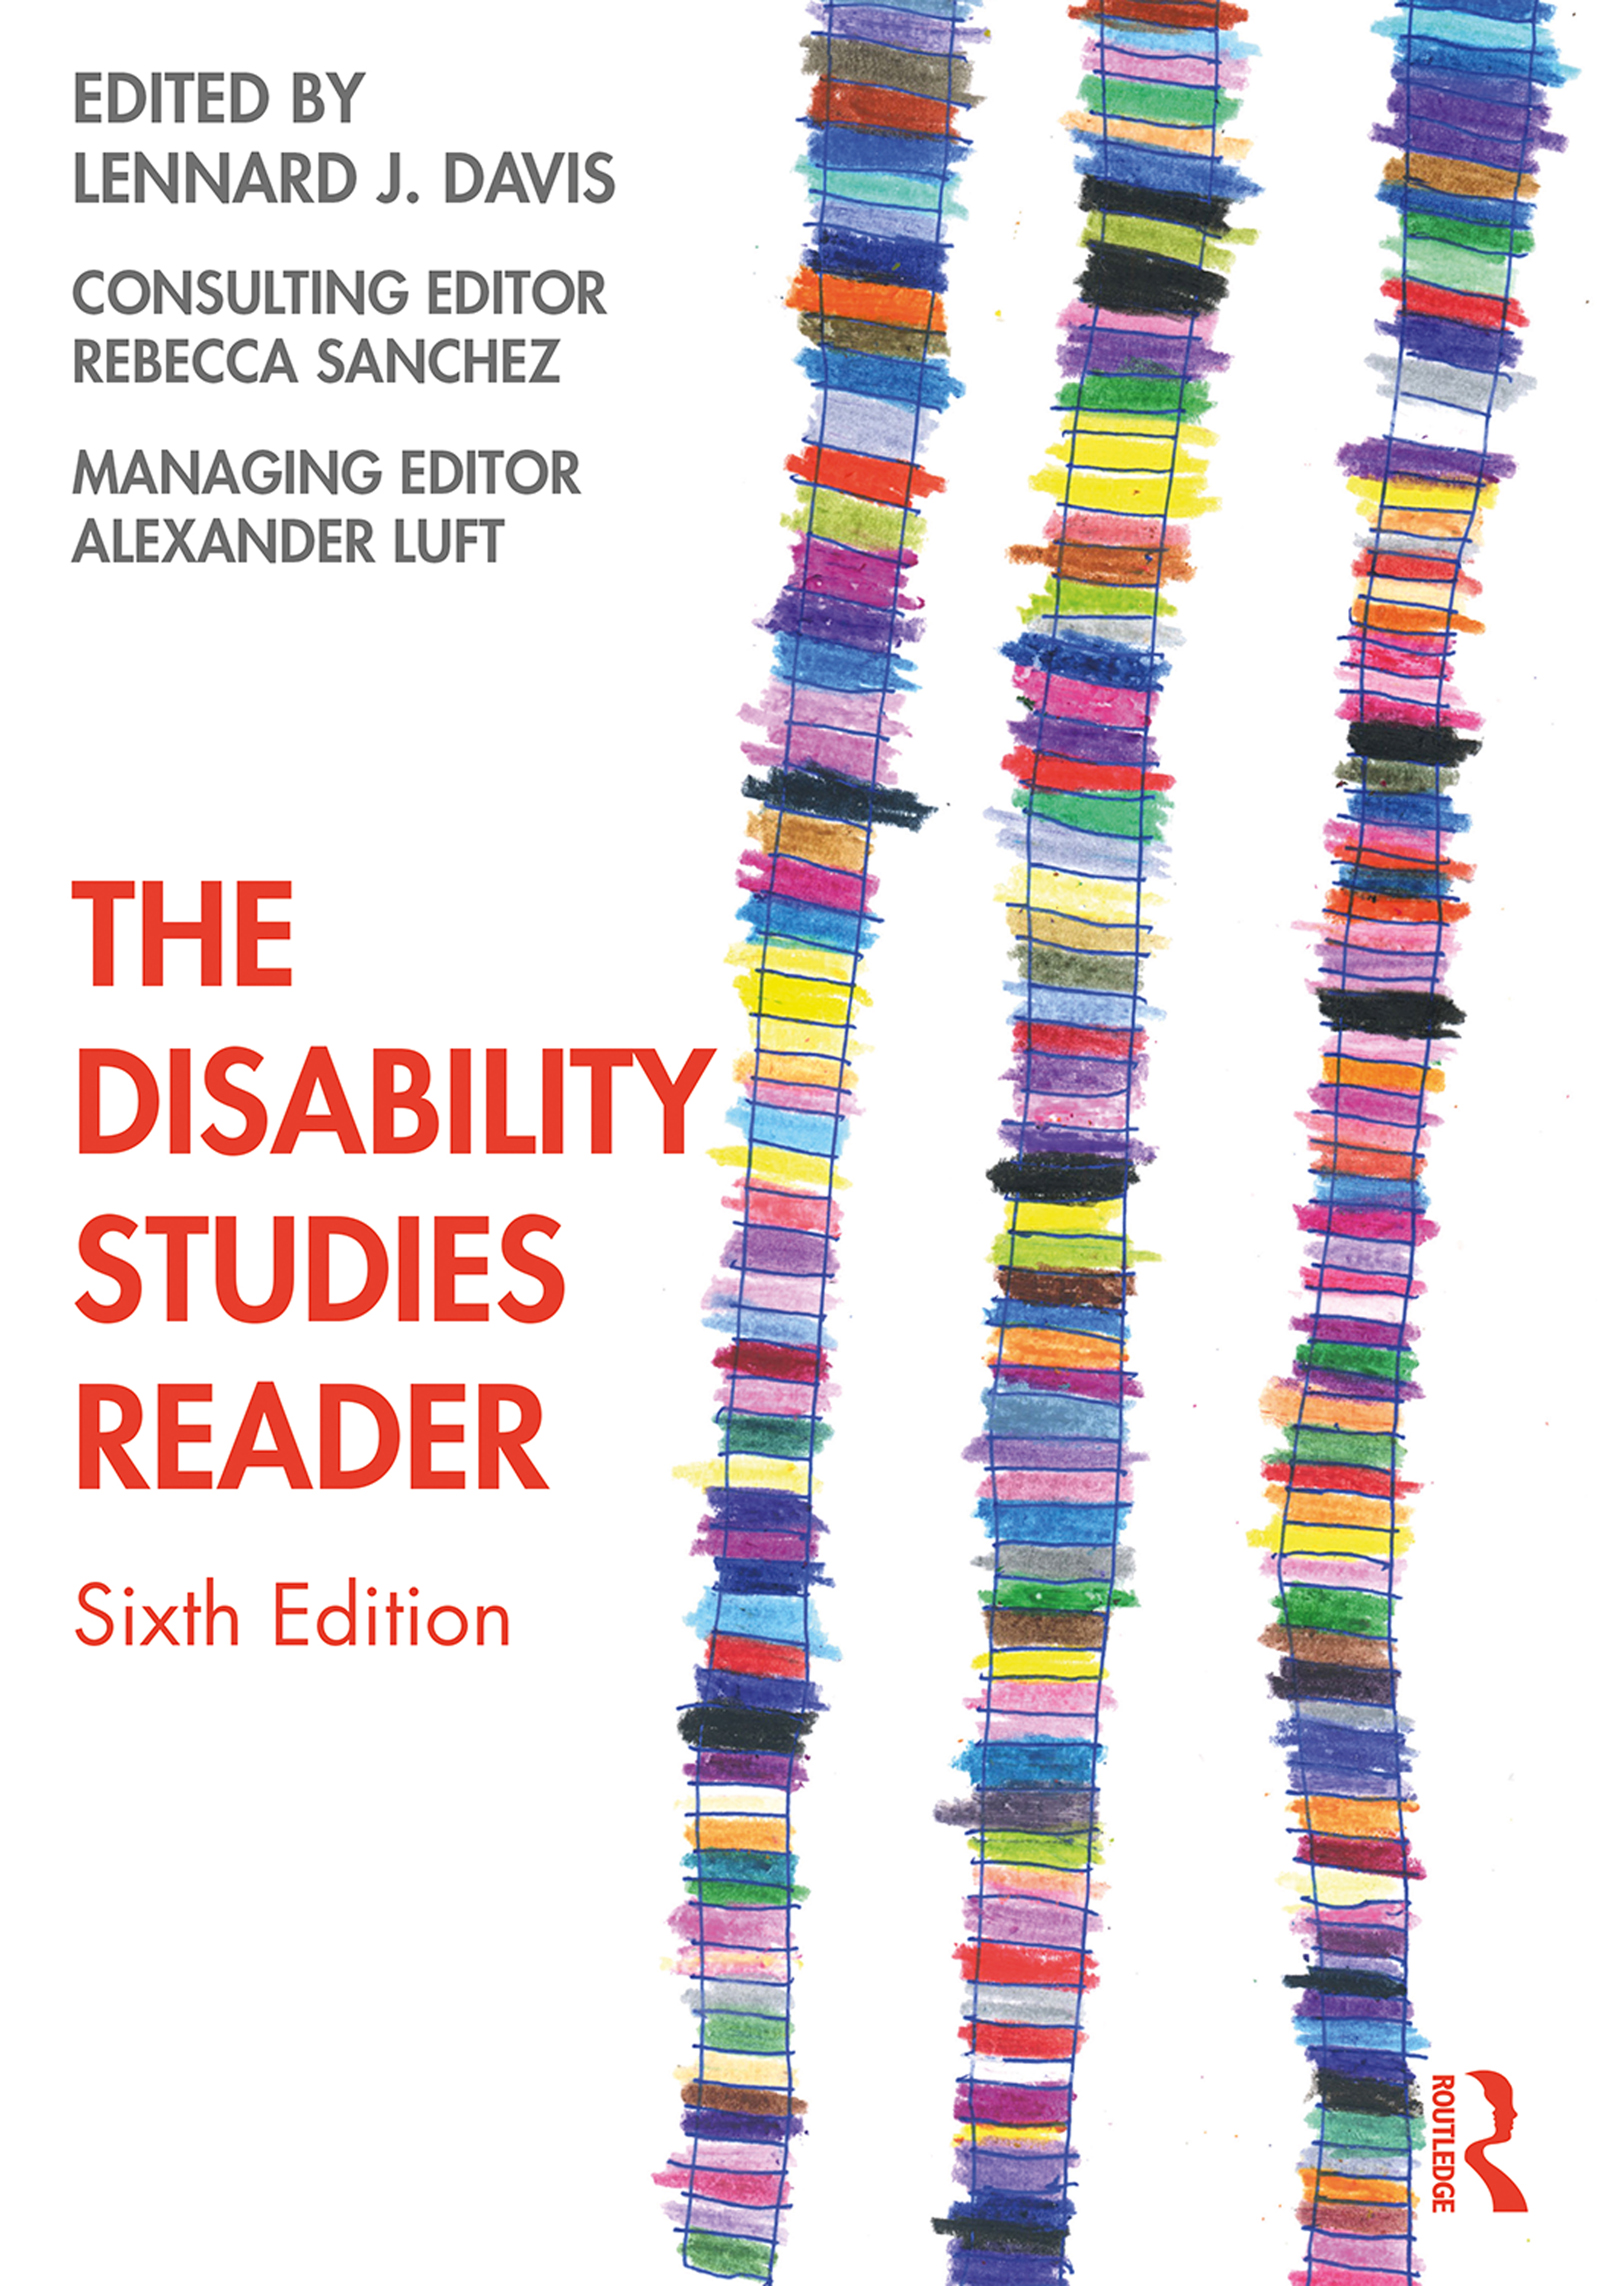 The Disability Studies Reader (6th ed.) by Lennard J. Davis (ebook)